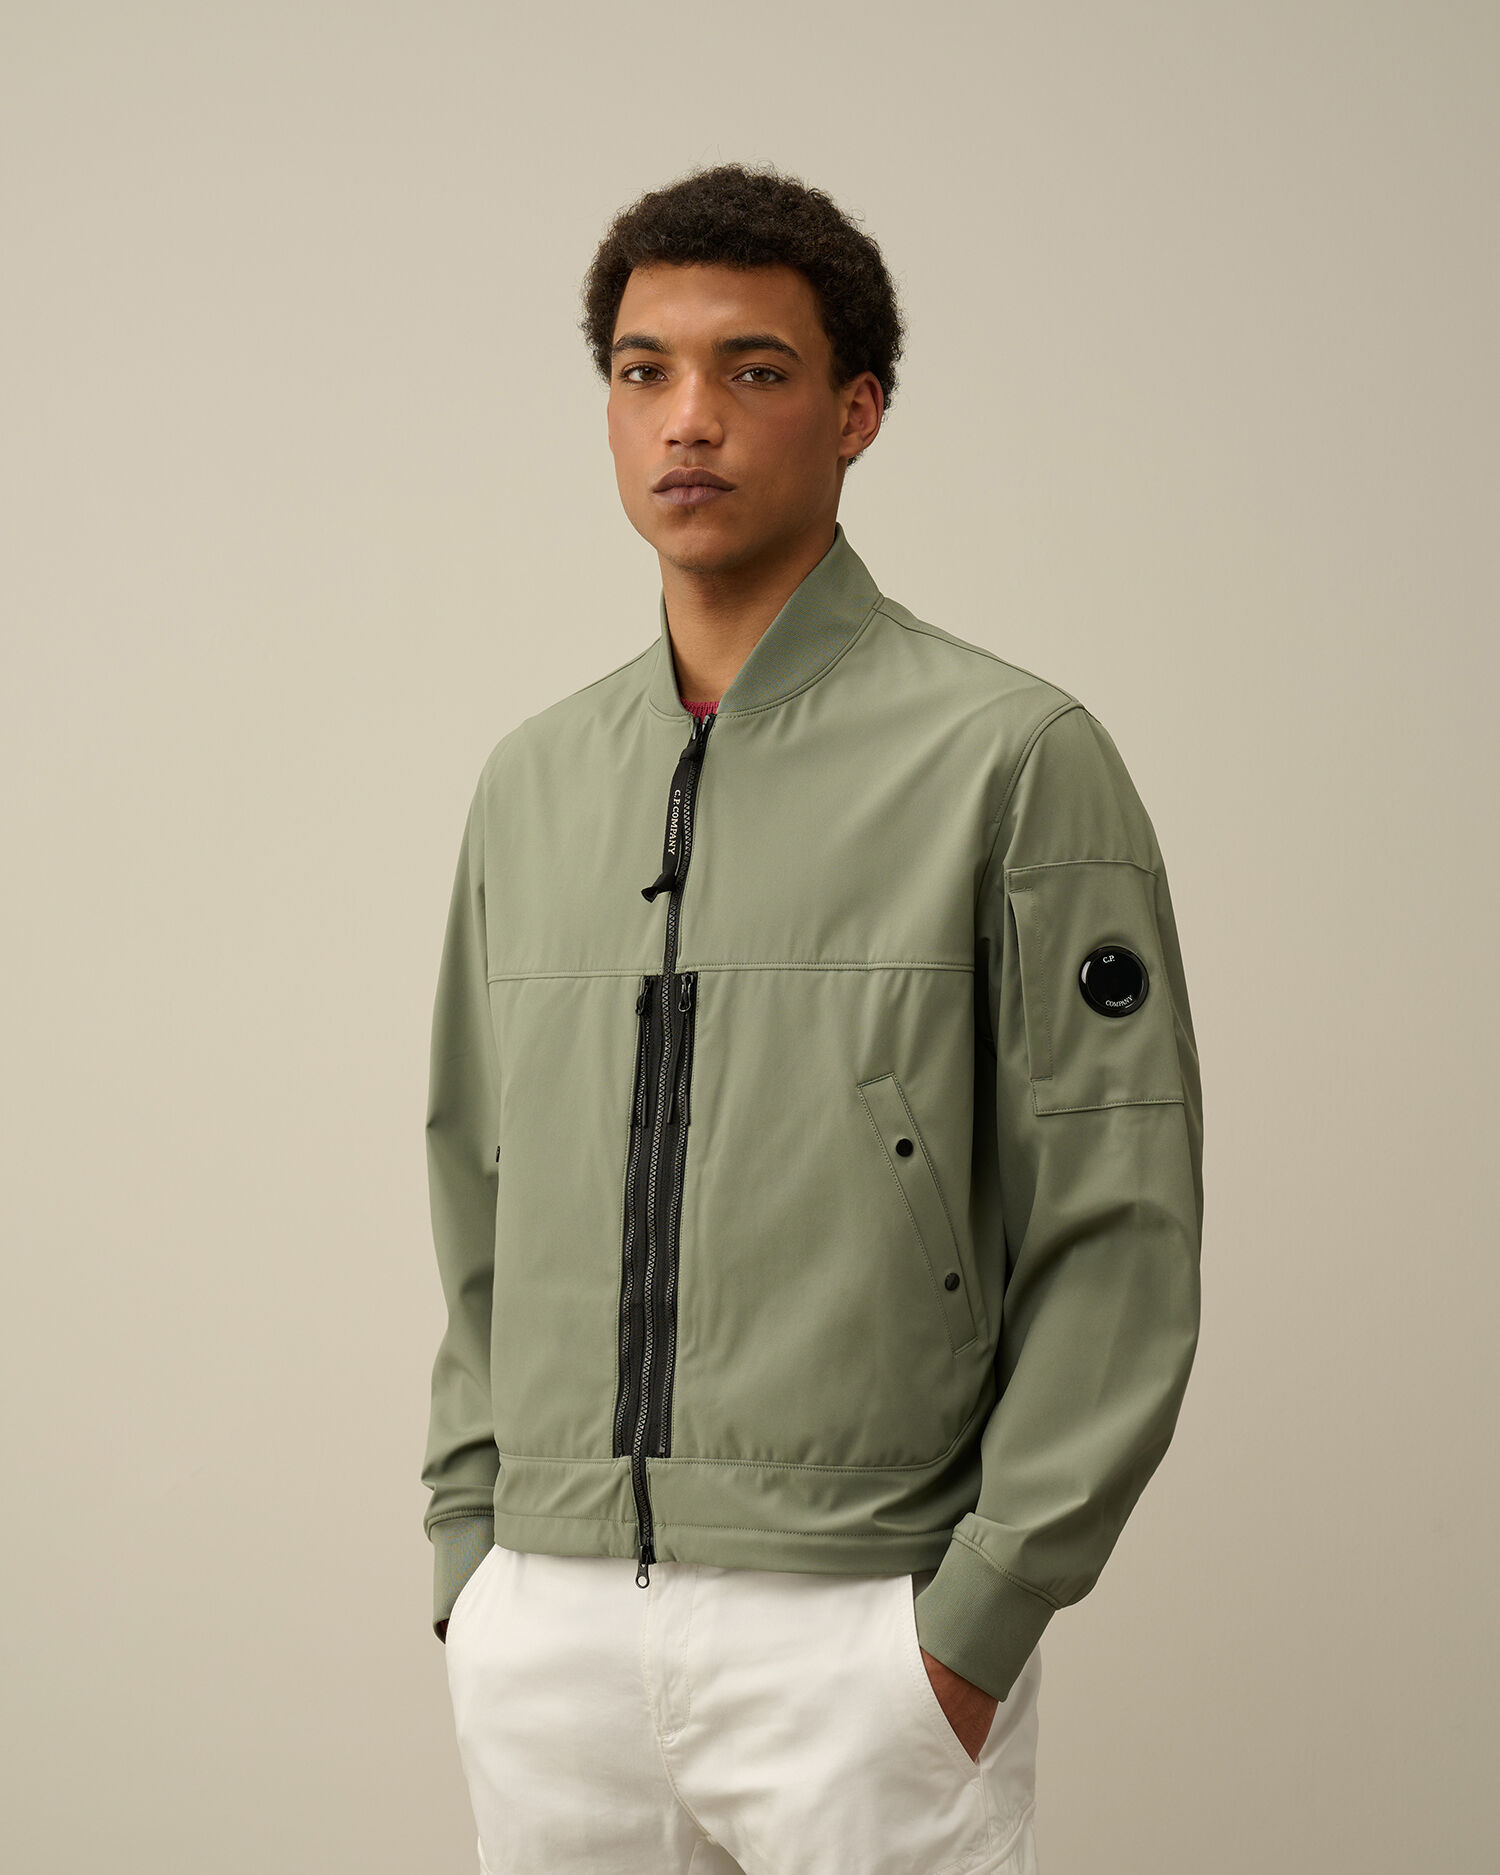 Outerwear - Men's Jackets, Coats & Gilets | C.P. Company